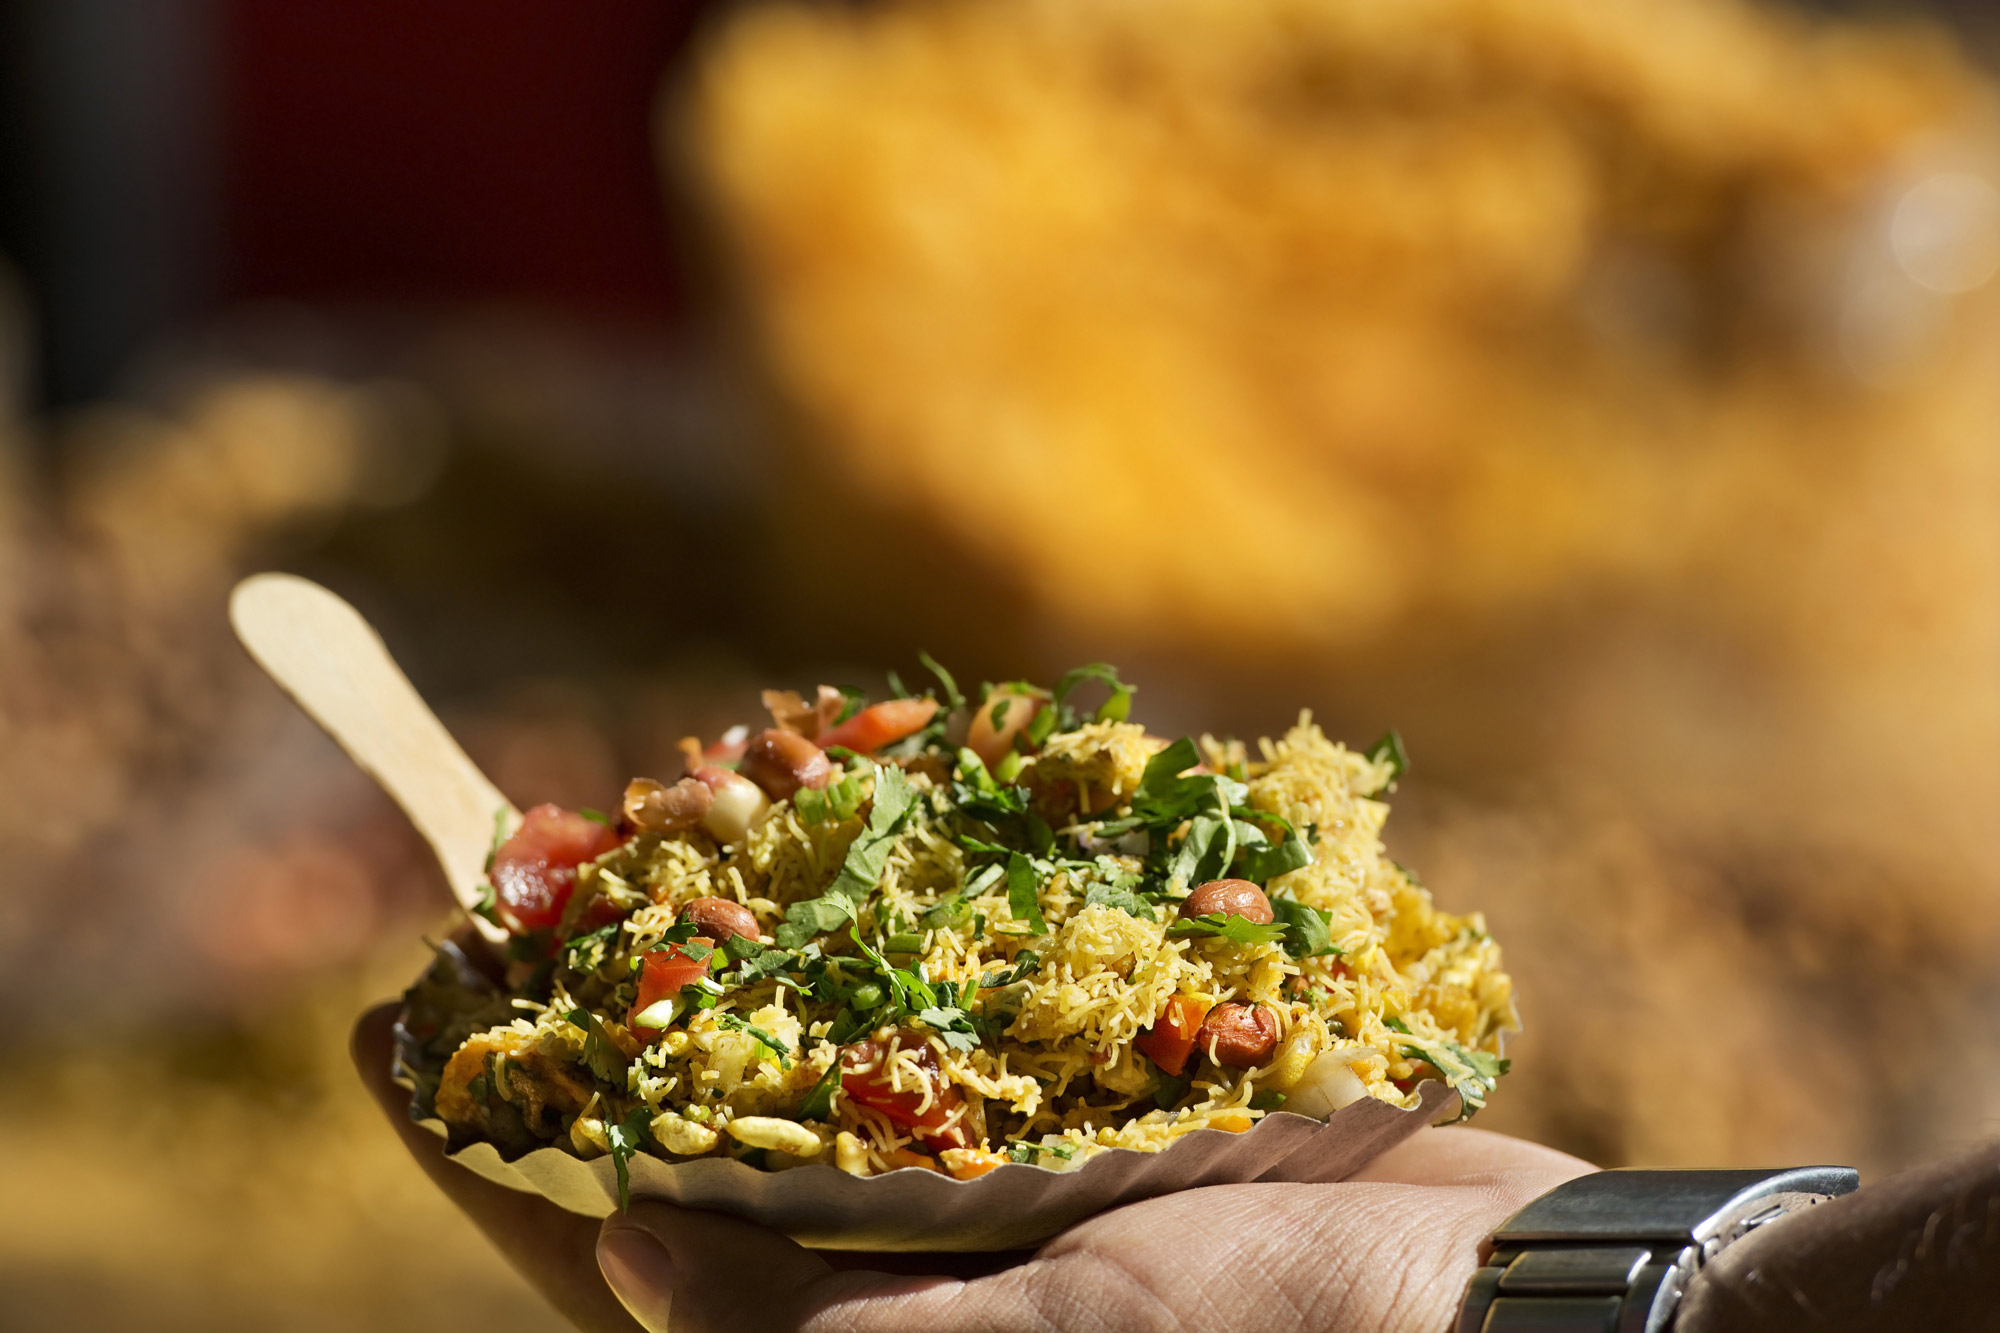 Bhelpuri puffed rice classic Mumbai street food must-try Indian dishes